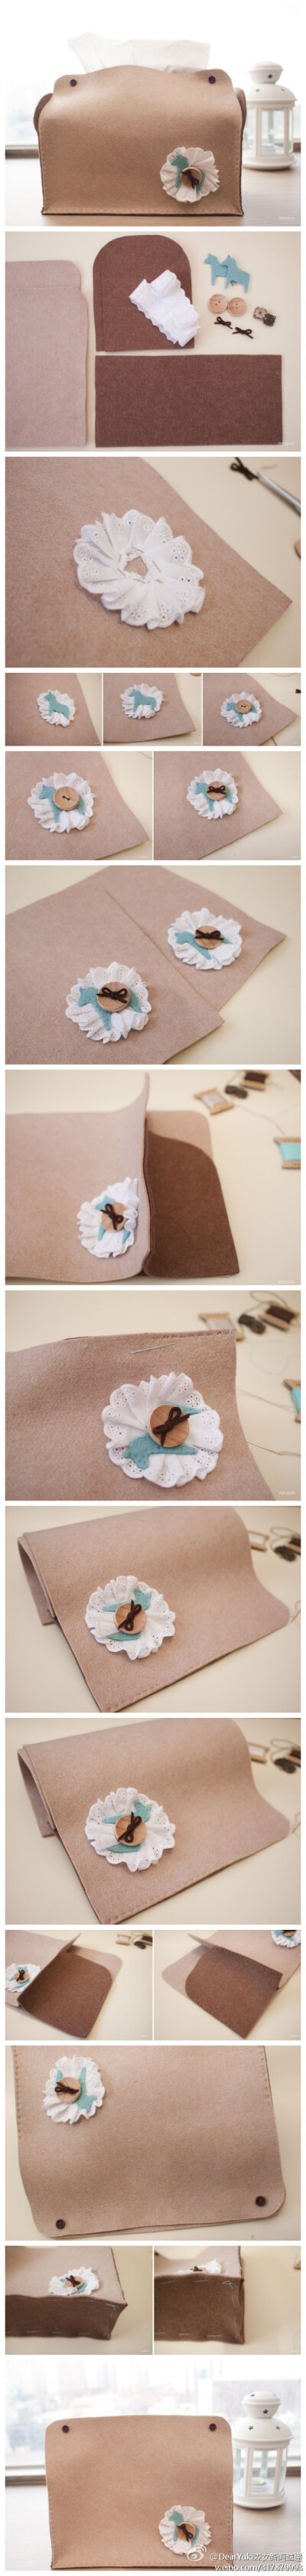 【DIY森女纸巾盒】 美美的森系小木马纸巾盒，跟着教程来学习学习吧